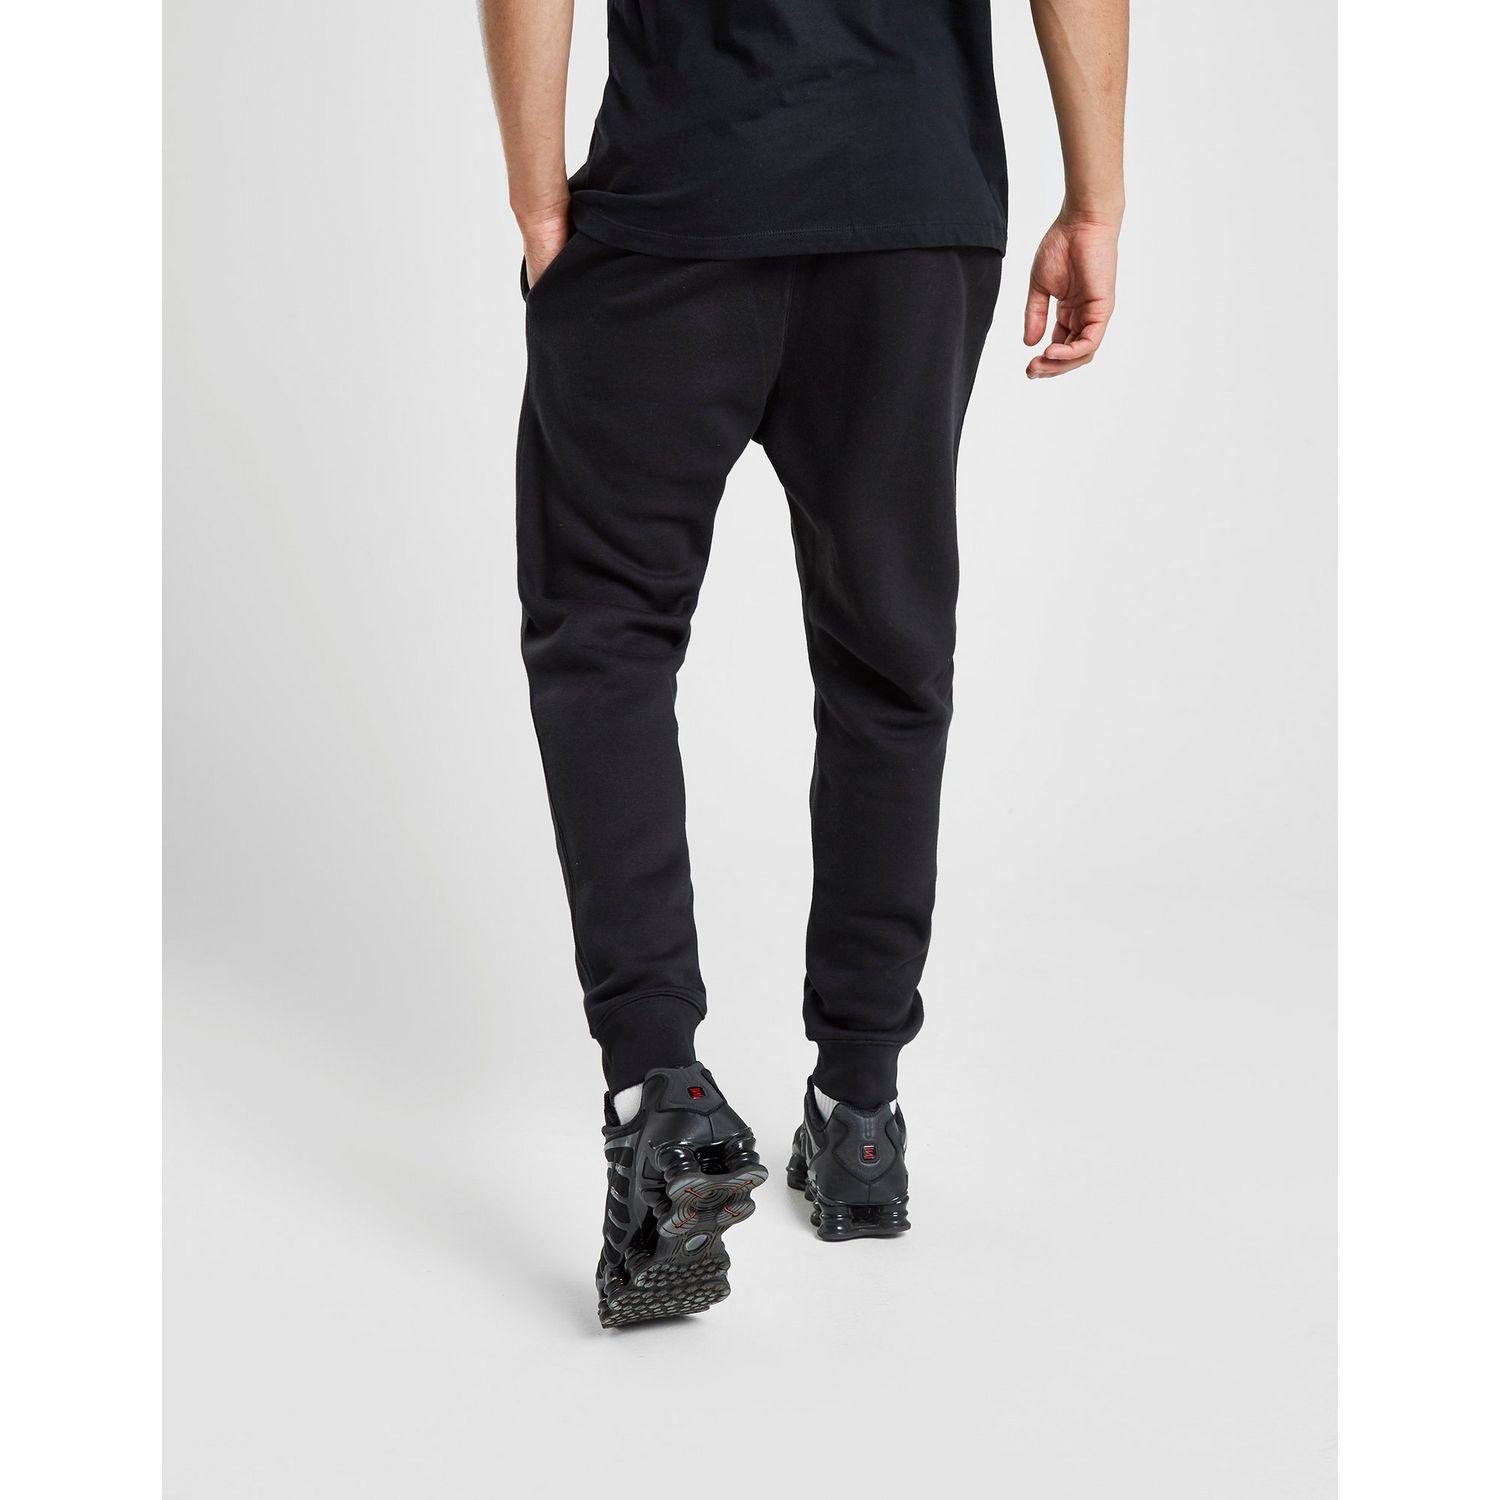 Nike Just Do It Box Logo Fleece Joggers in Black/Black (Black) for Men ...